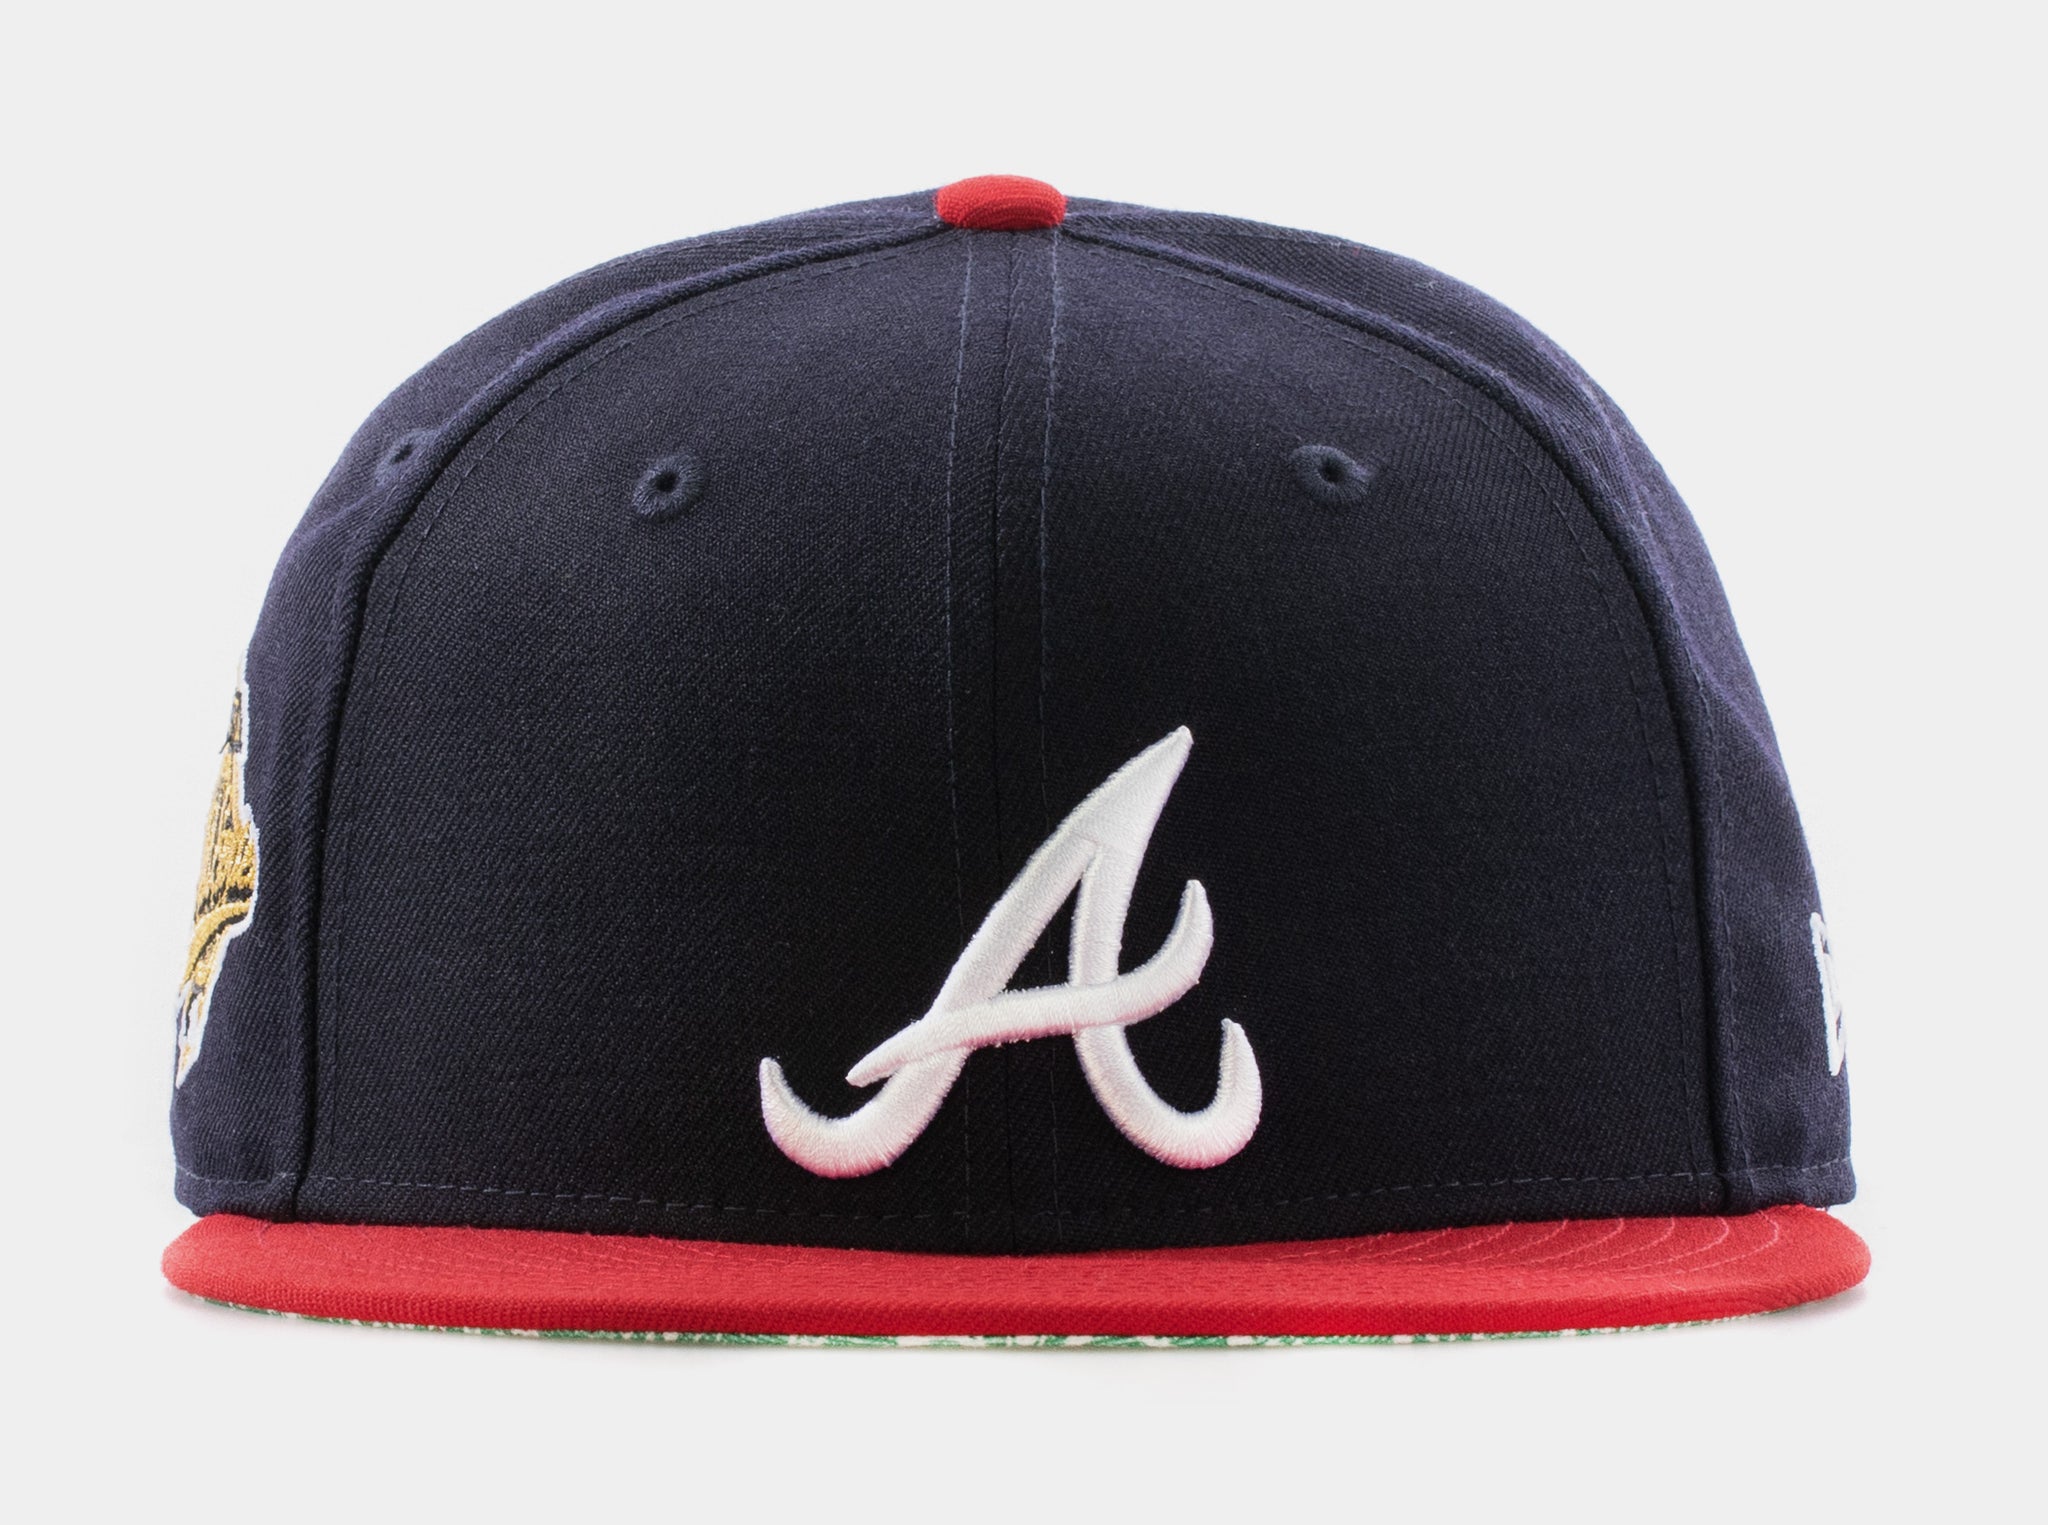 Men's Atlanta Braves New Era Light Blue 59FIFTY Fitted Hat